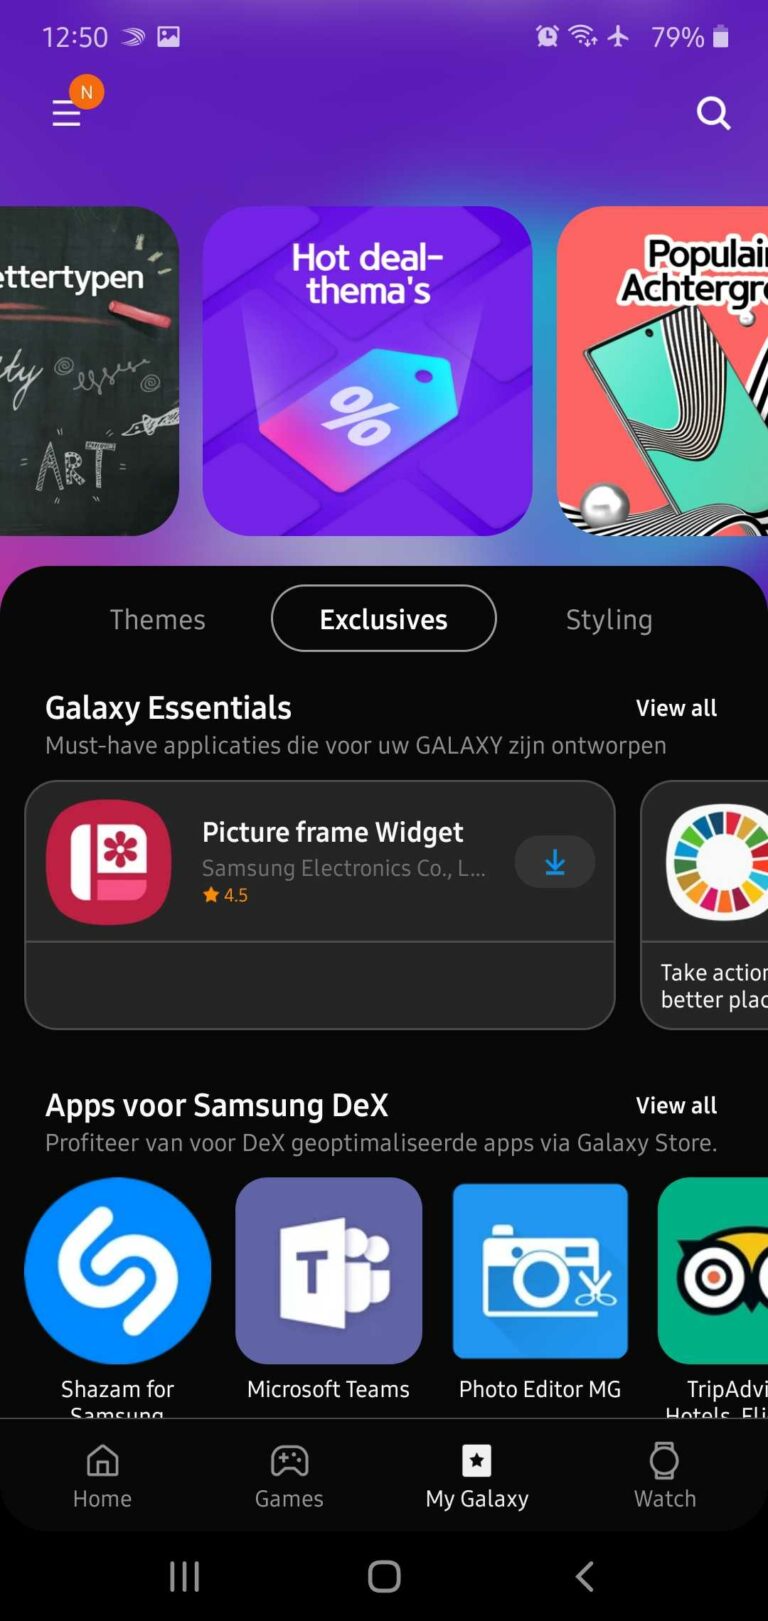 Galaxy Store update brings dark mode and One UI design